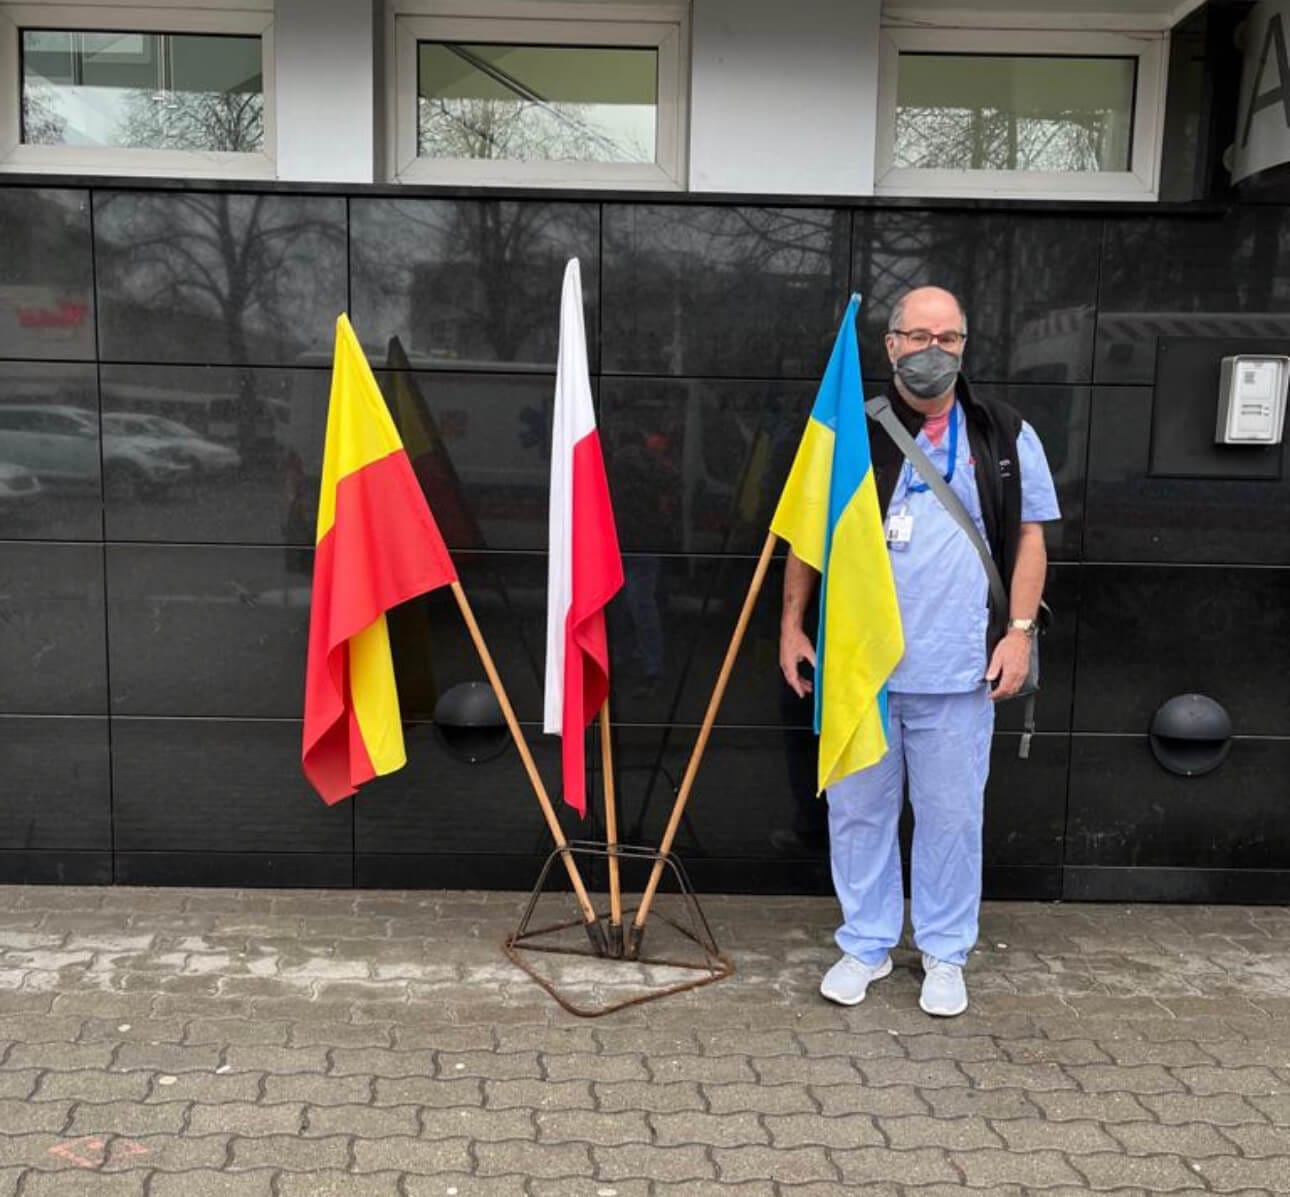 Dr. Sheldon Berkowitz, IMR Volunteer in Poland